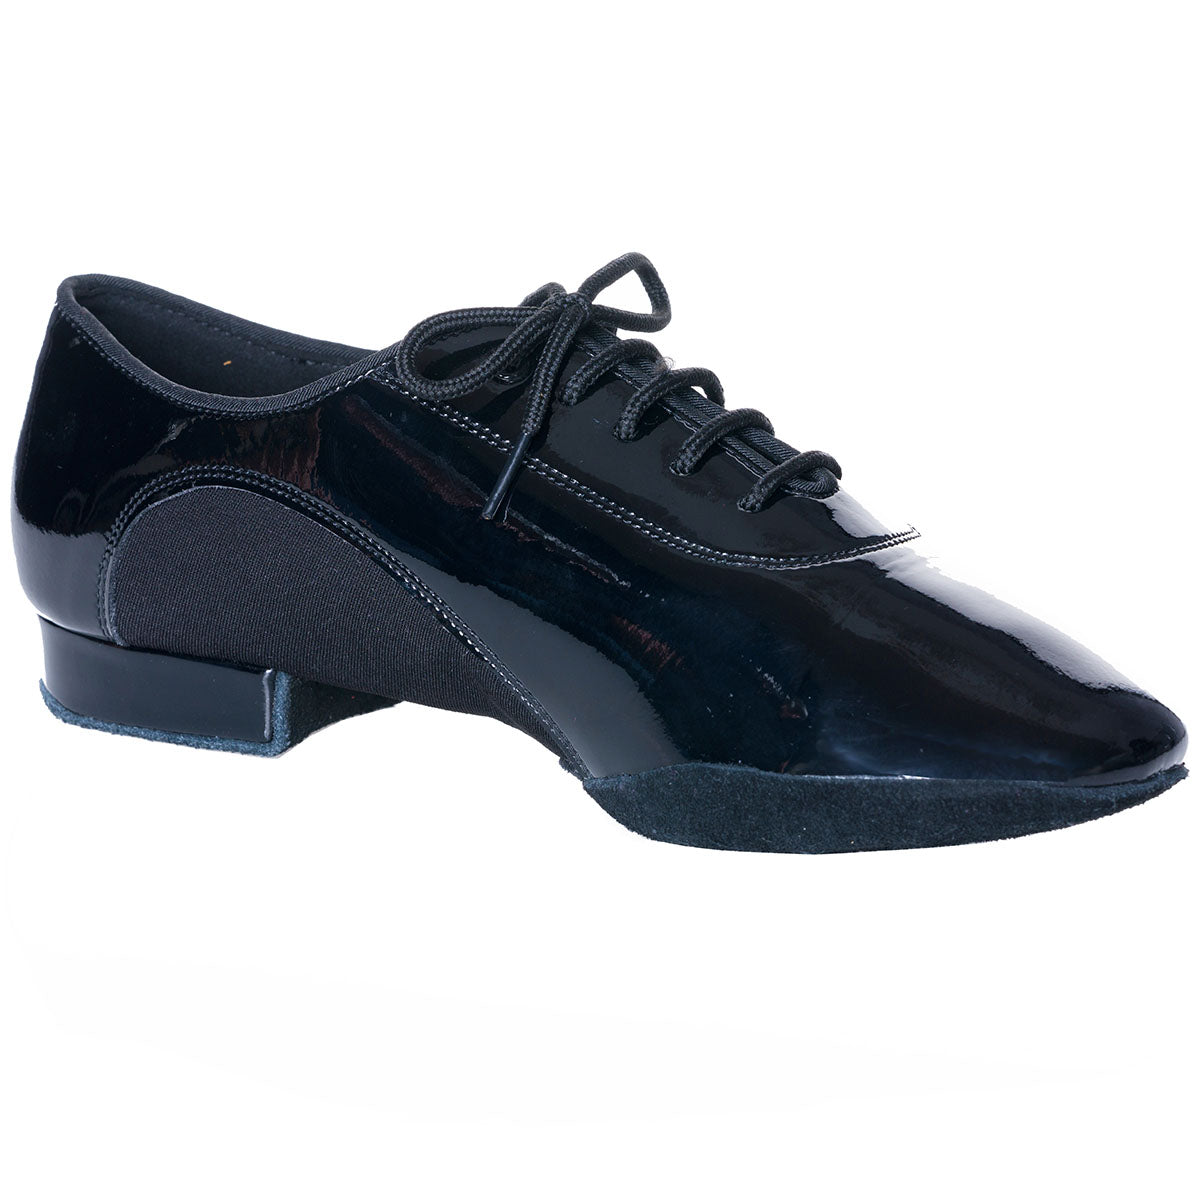 Dance America Chicago Men's Black Patent Leather Ballroom Shoe with Split Sole